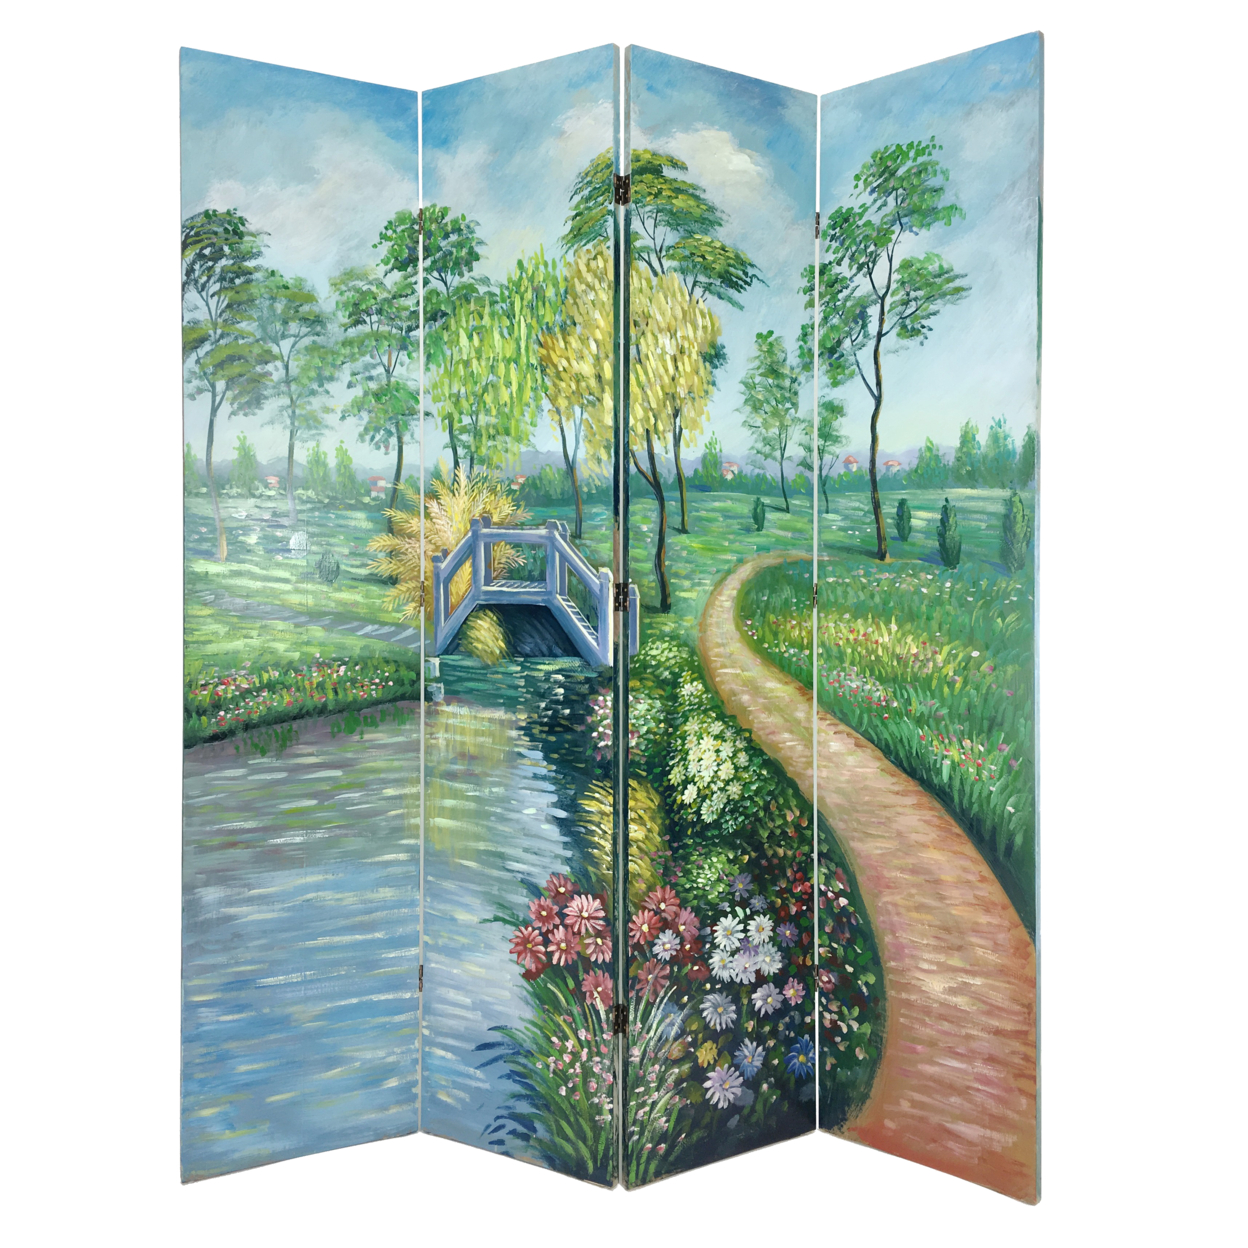 Wooden Double Sided 4 Panel Room Divider With Garden Scenes, Multicolor- Saltoro Sherpi